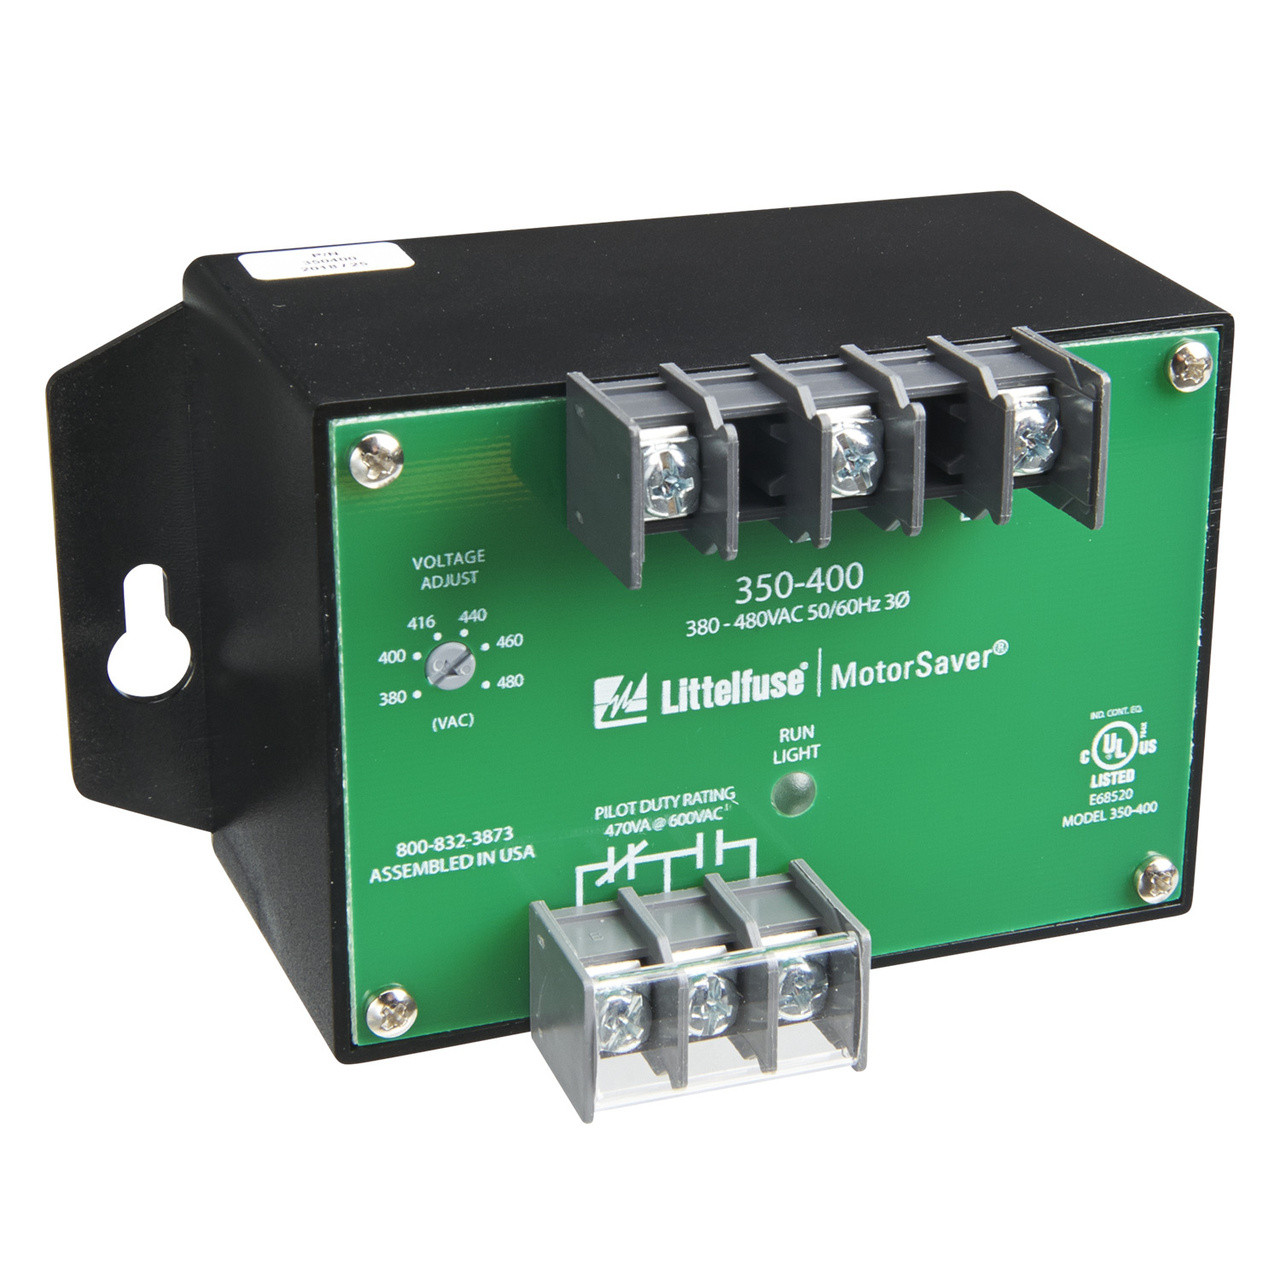 Littelfuse-Symcom 35020029 Voltage Monitor Relays